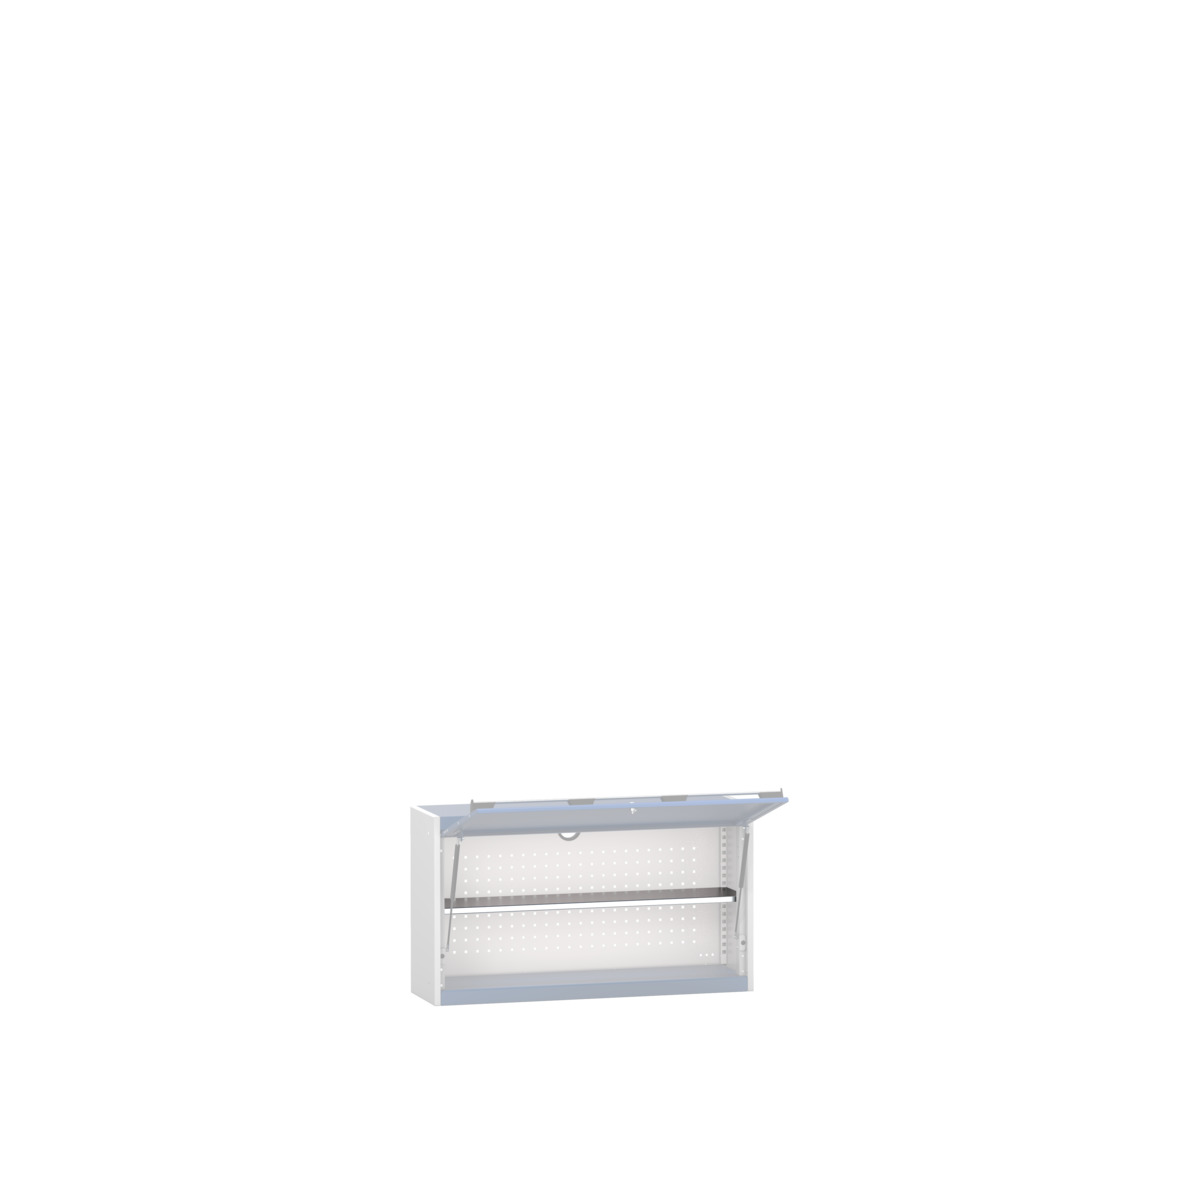 42101096.51 - cubio shelf kit